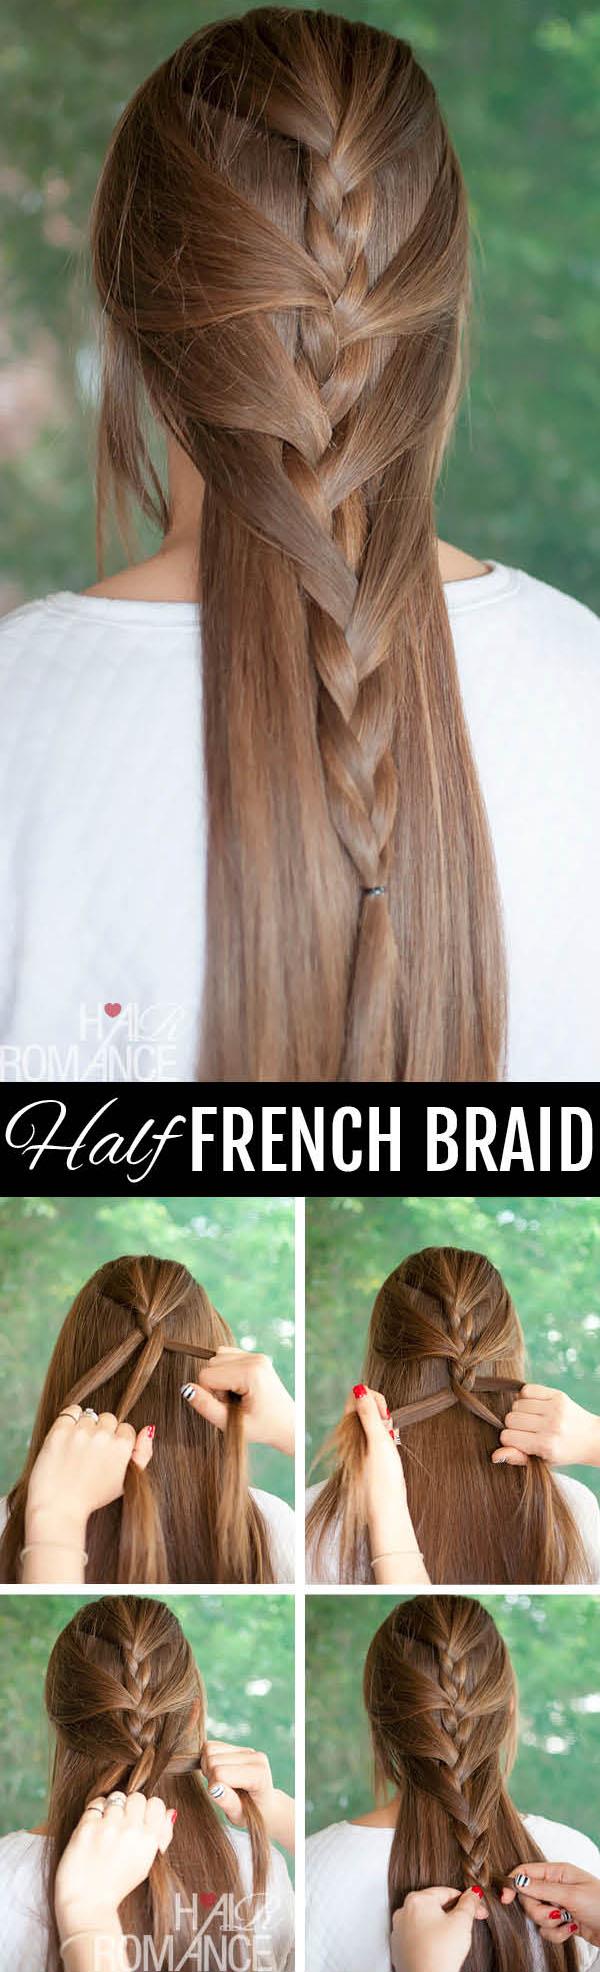 Hair-Romance-French-Braid-hair-style-tutorial (Copy)